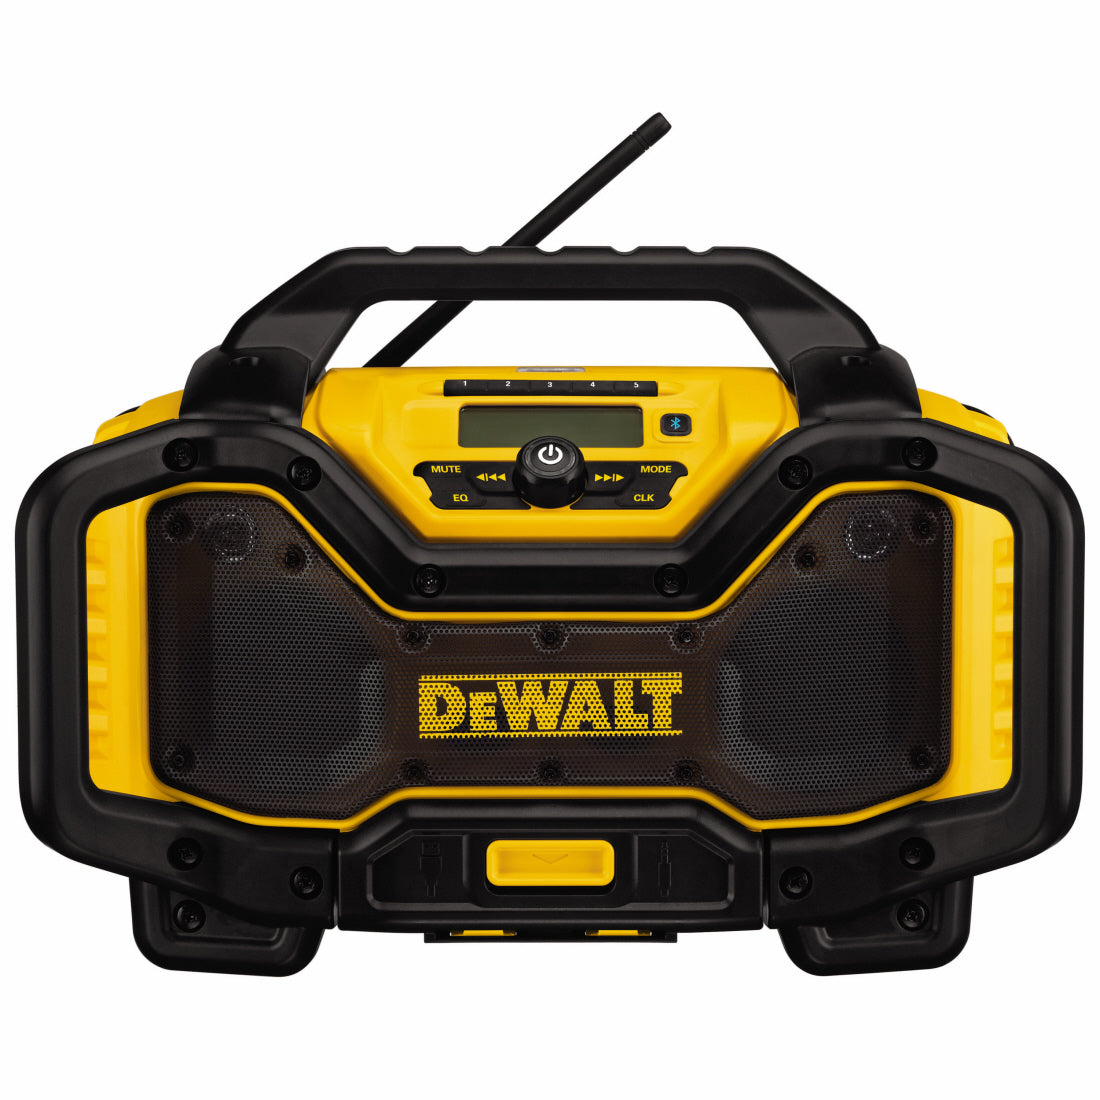 DEWALT DCR025 FLEXVOLT Bluetooth Jobsite Radio Charger